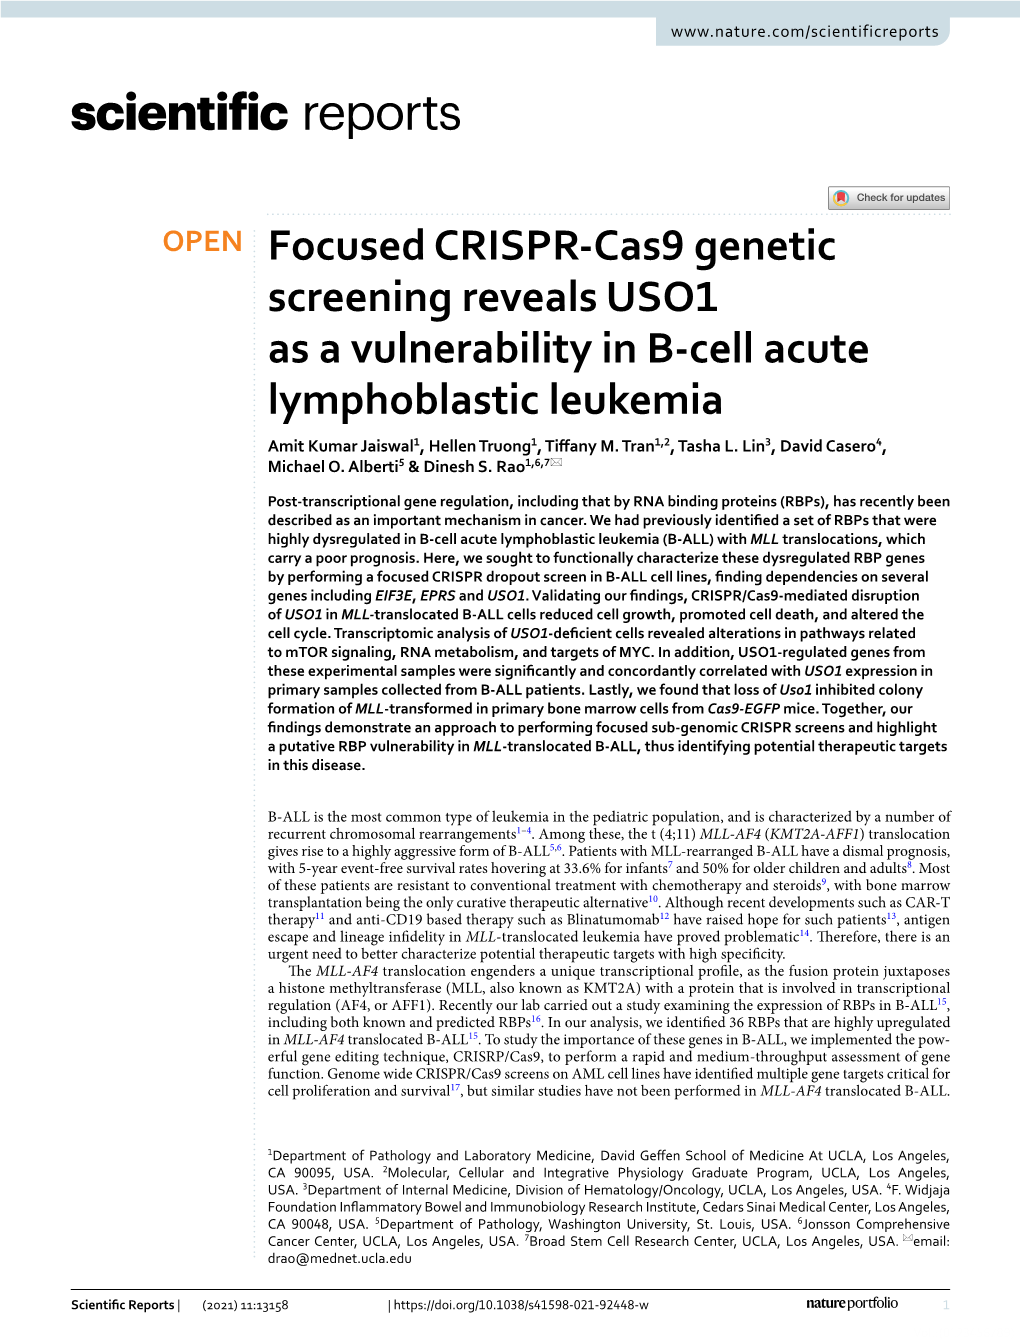 Focused CRISPR-Cas9 Genetic Screening Reveals USO1 As a Vulnerability in B-Cell Acute Lymphoblastic Leukemia